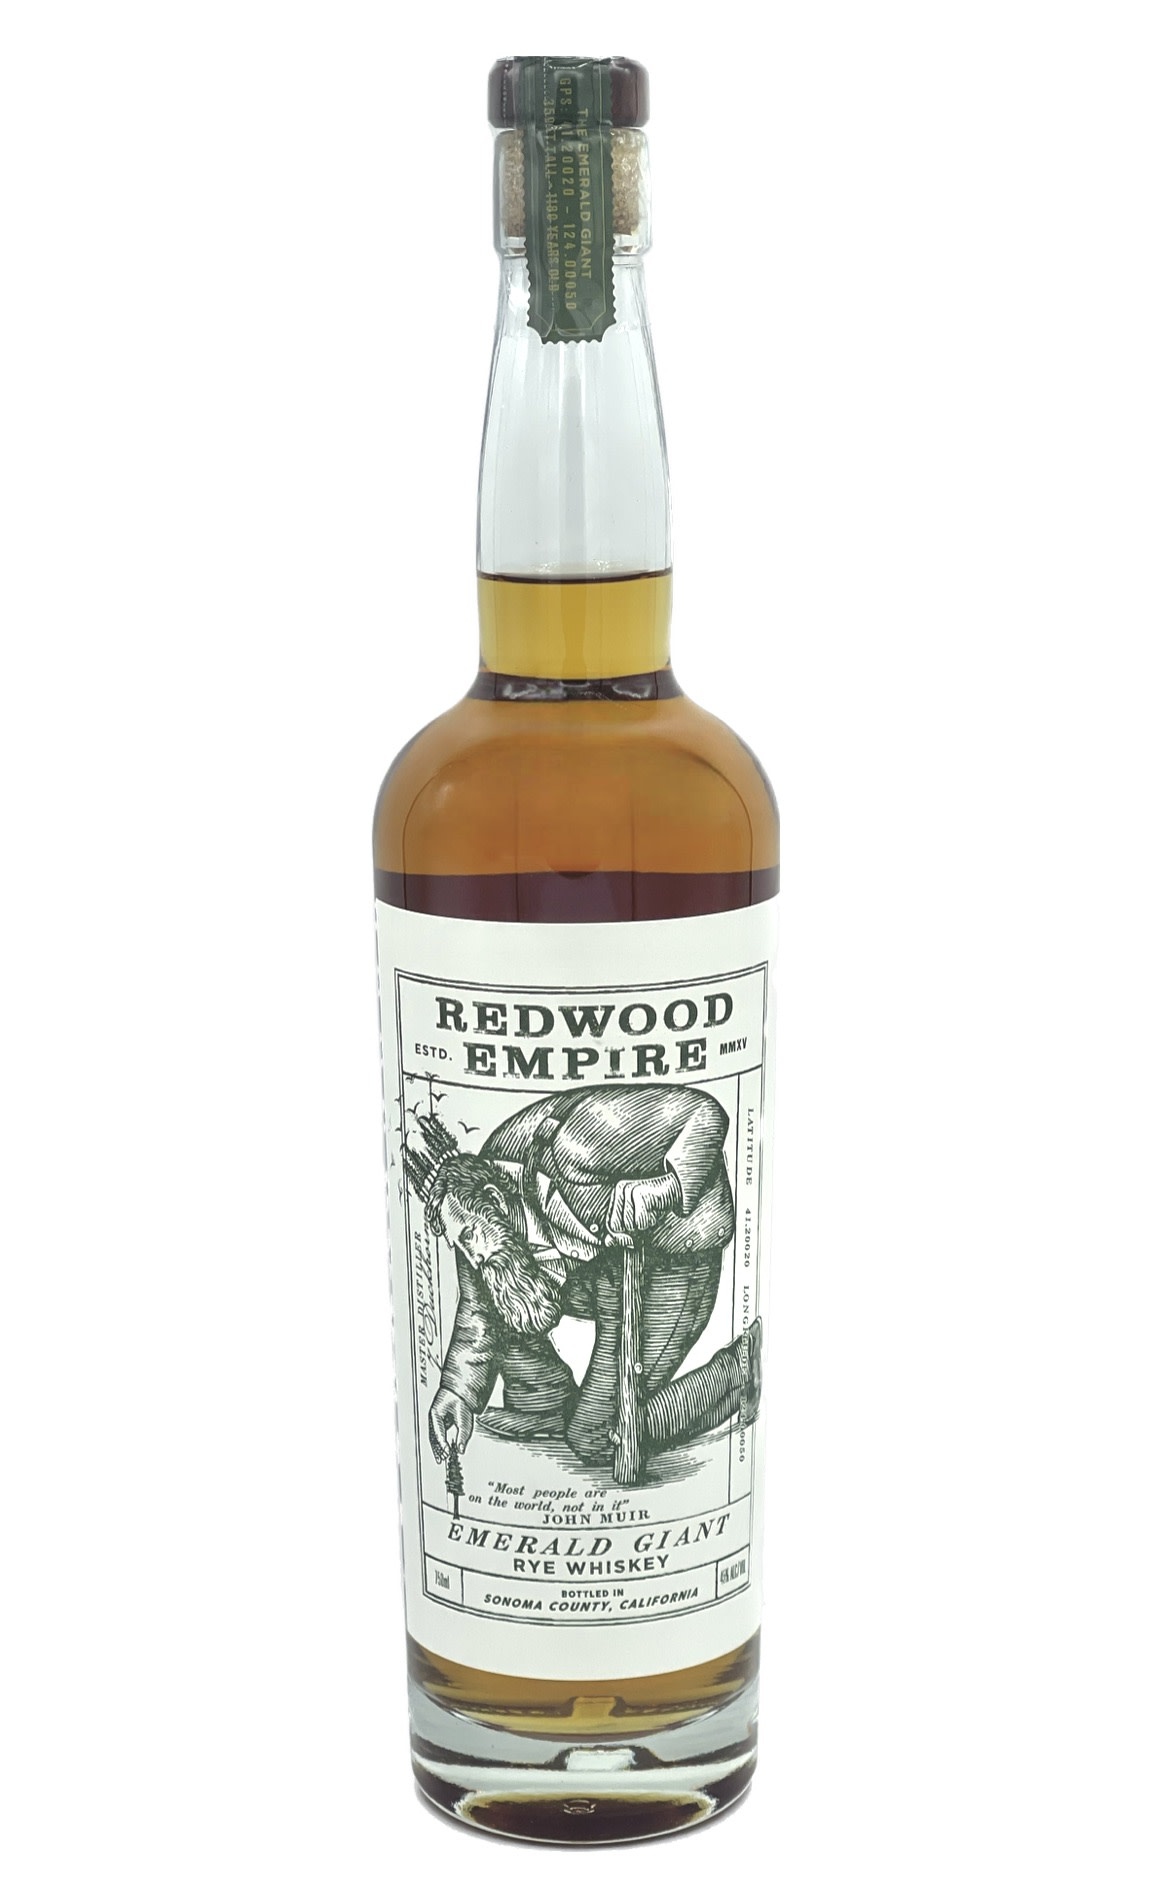 Redwood Empire Sonoma Co. Rye Whiskey "Emerald Giant" (90 proof) 750ml